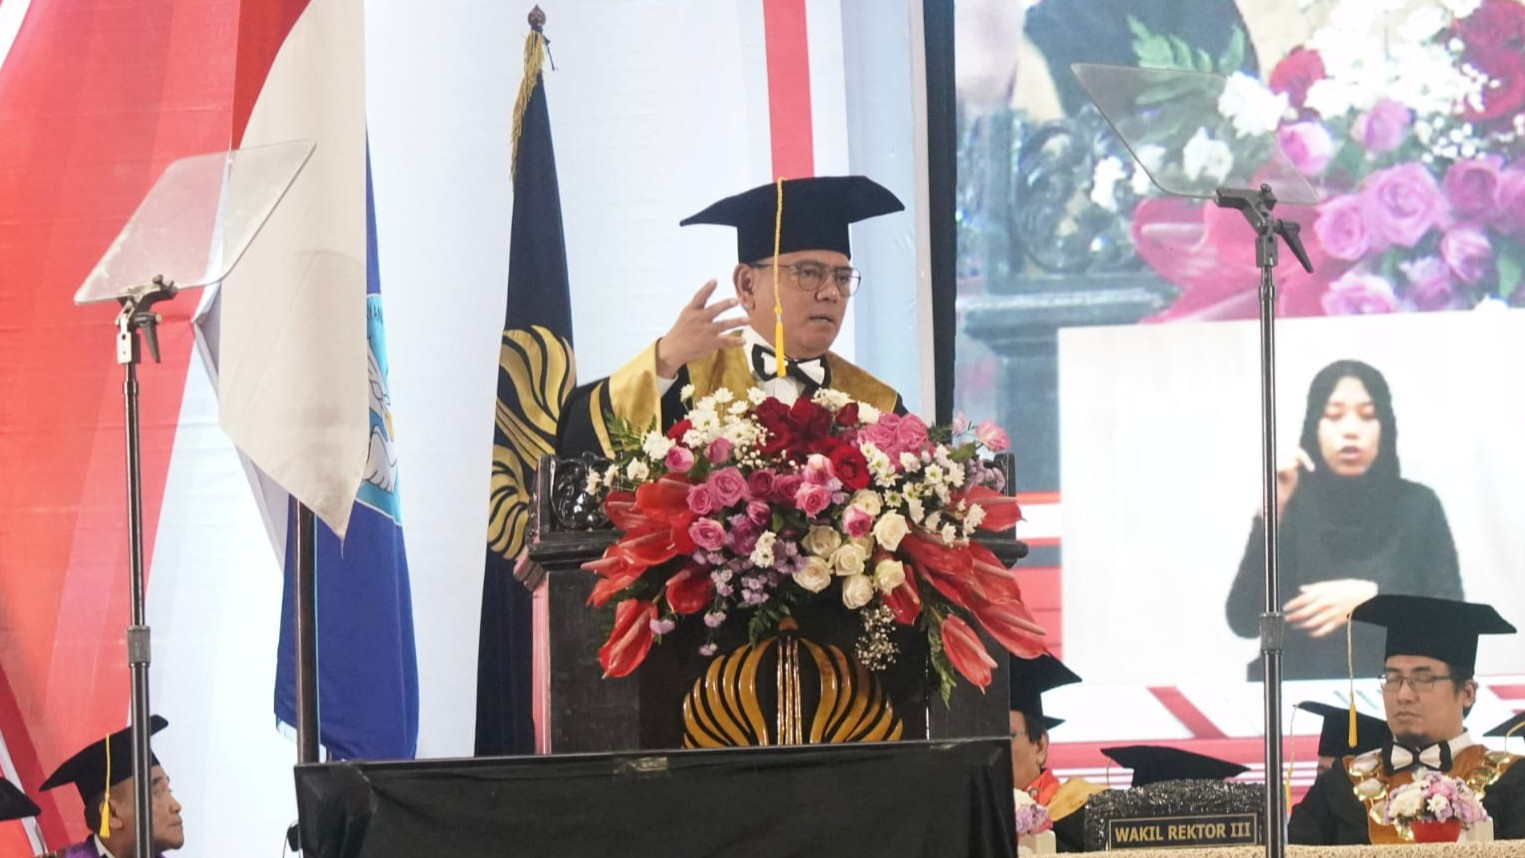 Sekretaris Jenderal Kementerian Hukum dan HAM (Kemenkumham), Komjen Pol. Andap Budhi Revianto menerima Penganugerahan Gelar Doktor Kehormatan (Honoris Causa) dari Universitas Negeri Surabaya (Unesa).